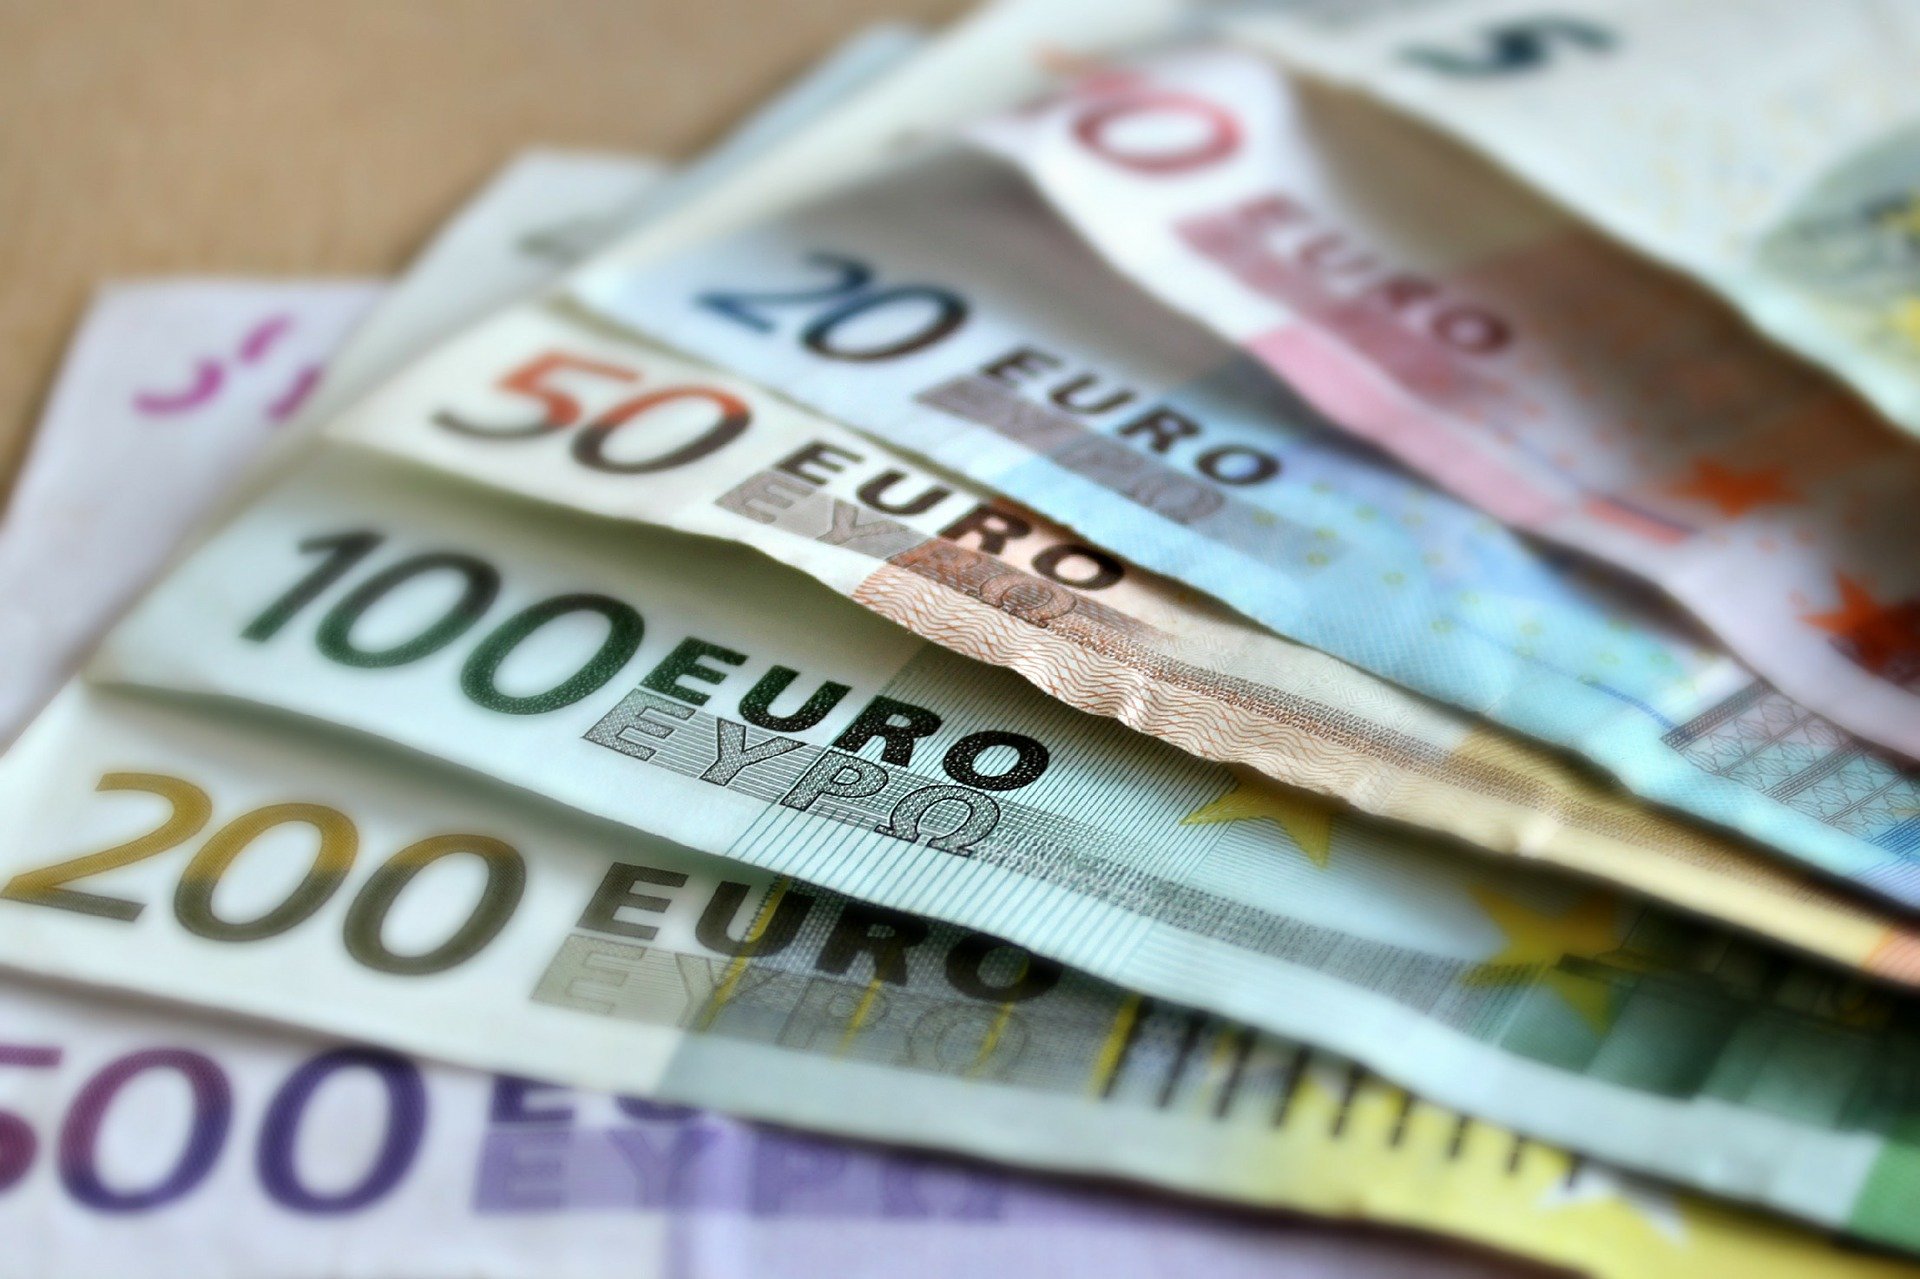 France Banque estimation Euro coronavirus